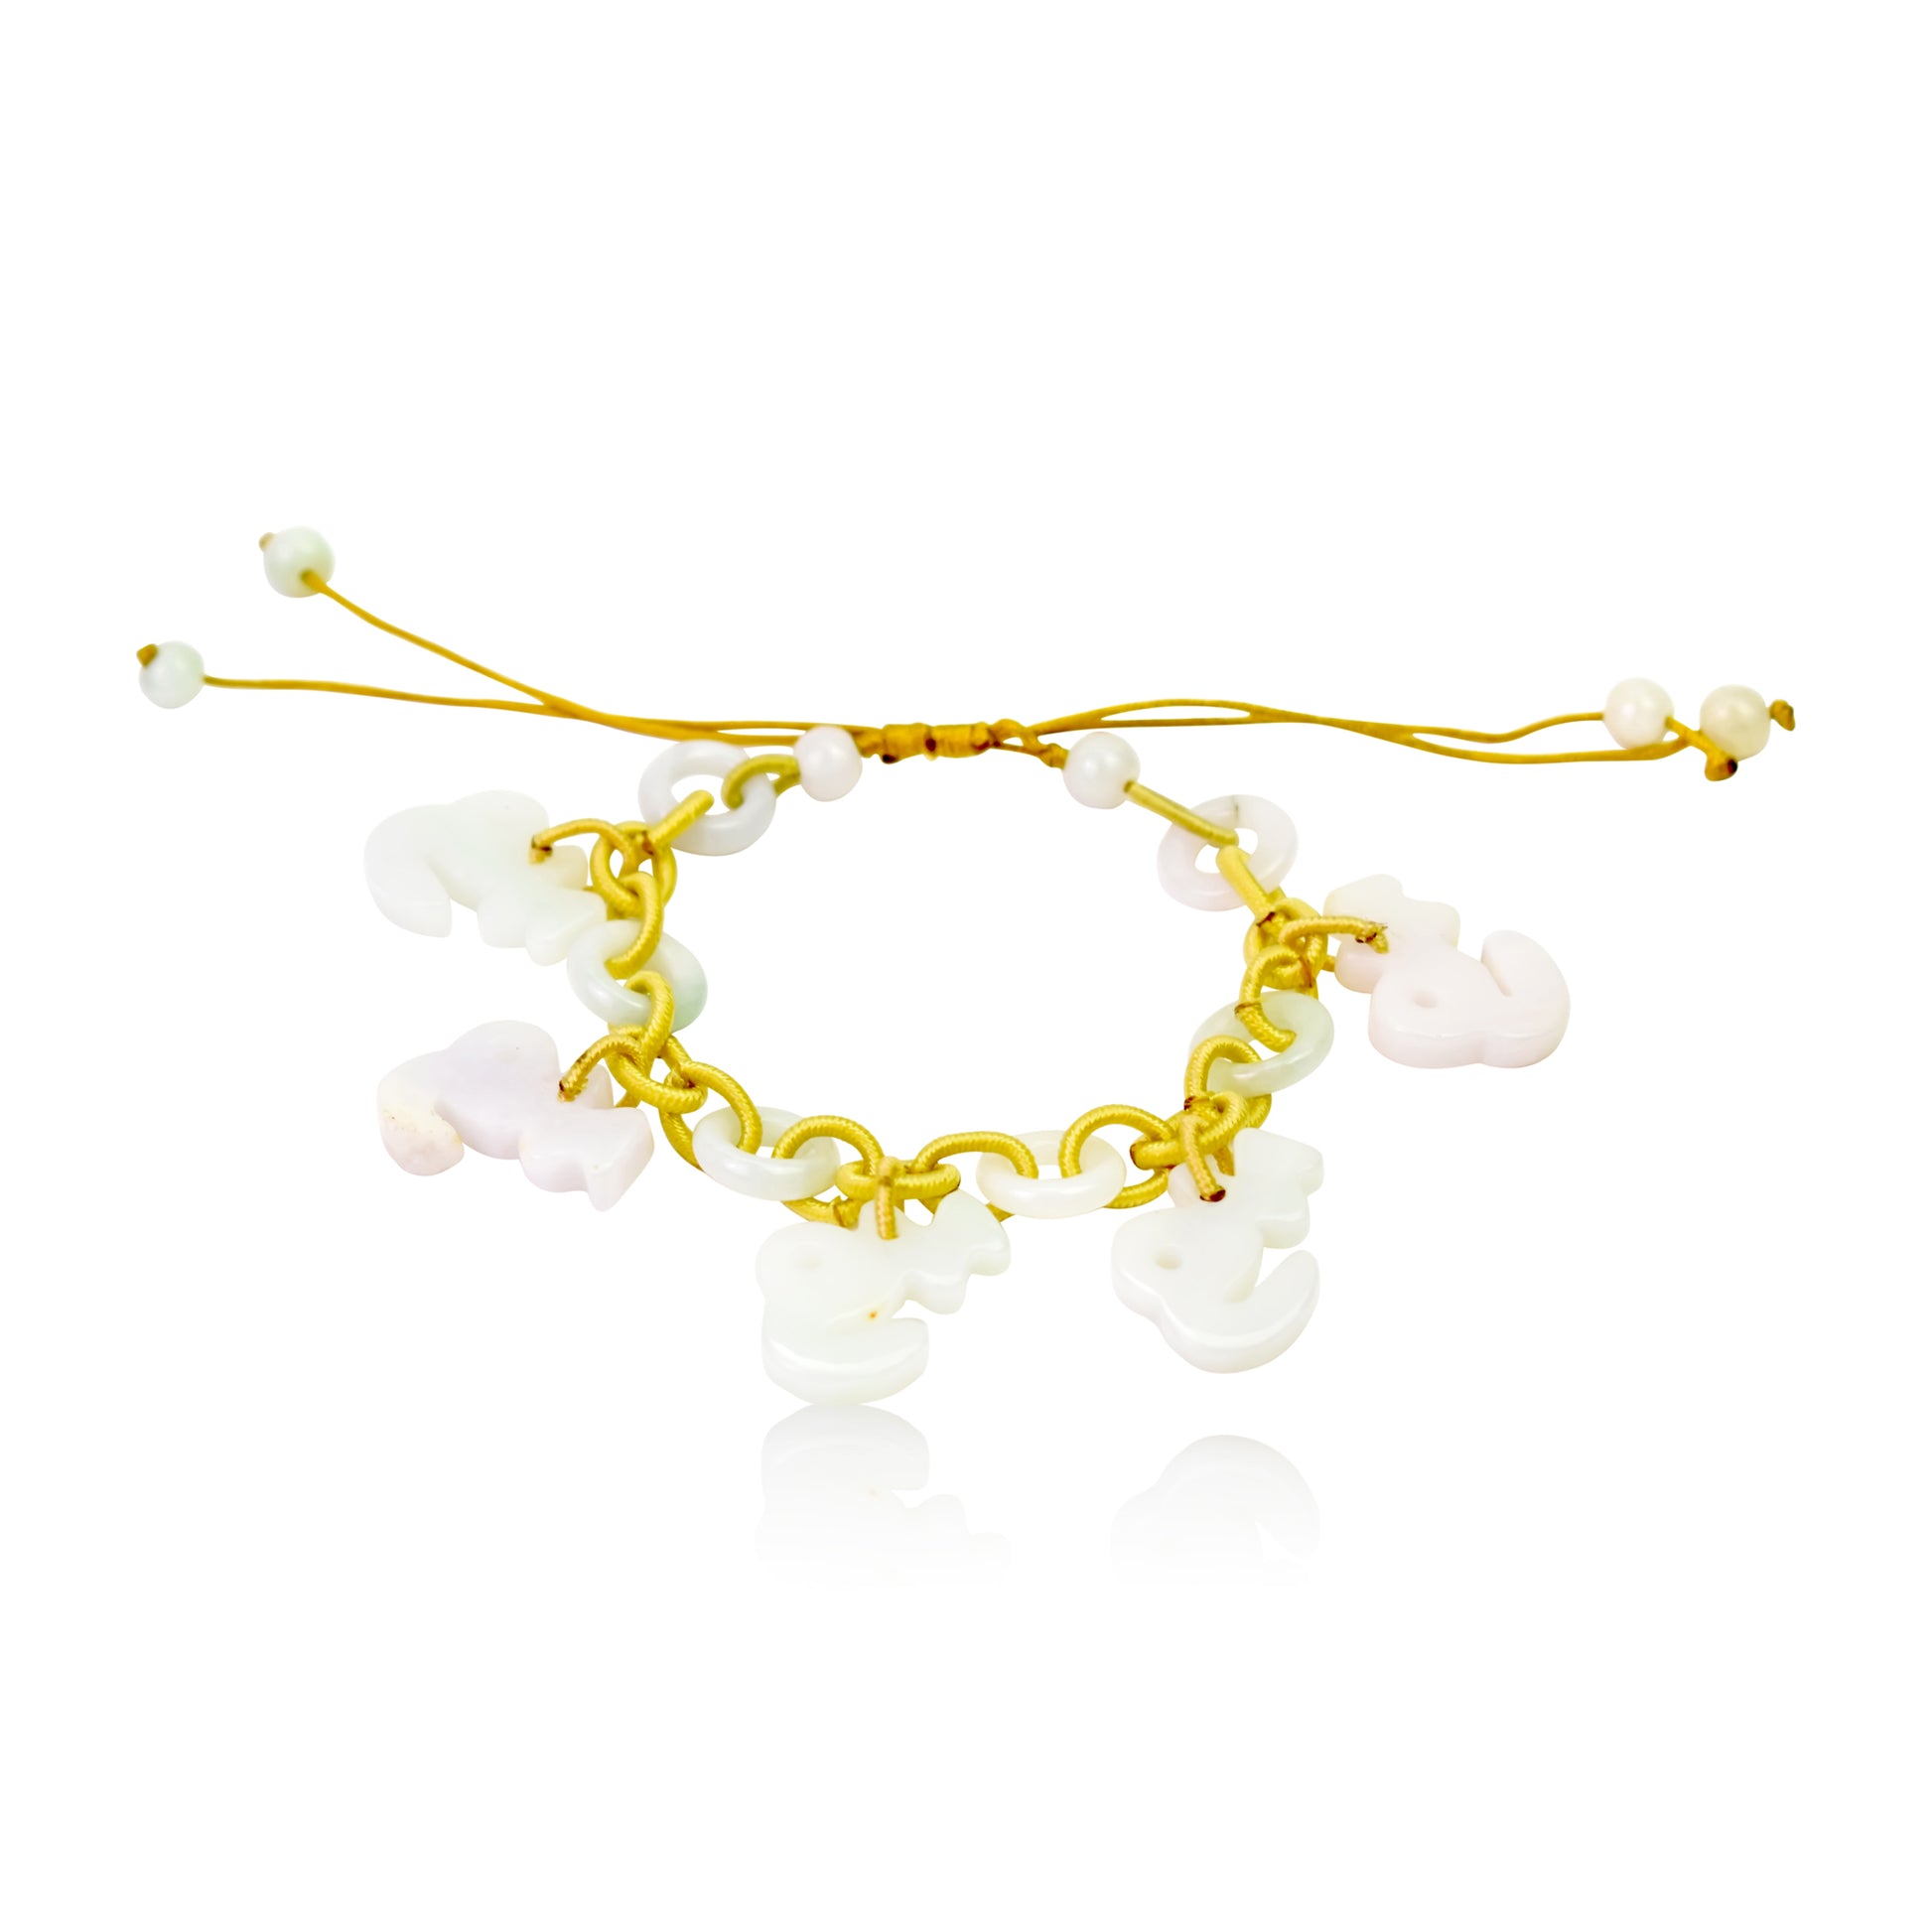 Honor the Capricorn Zodiac with Handmade Jade Jewelry Bracelet made with Yellow Cord